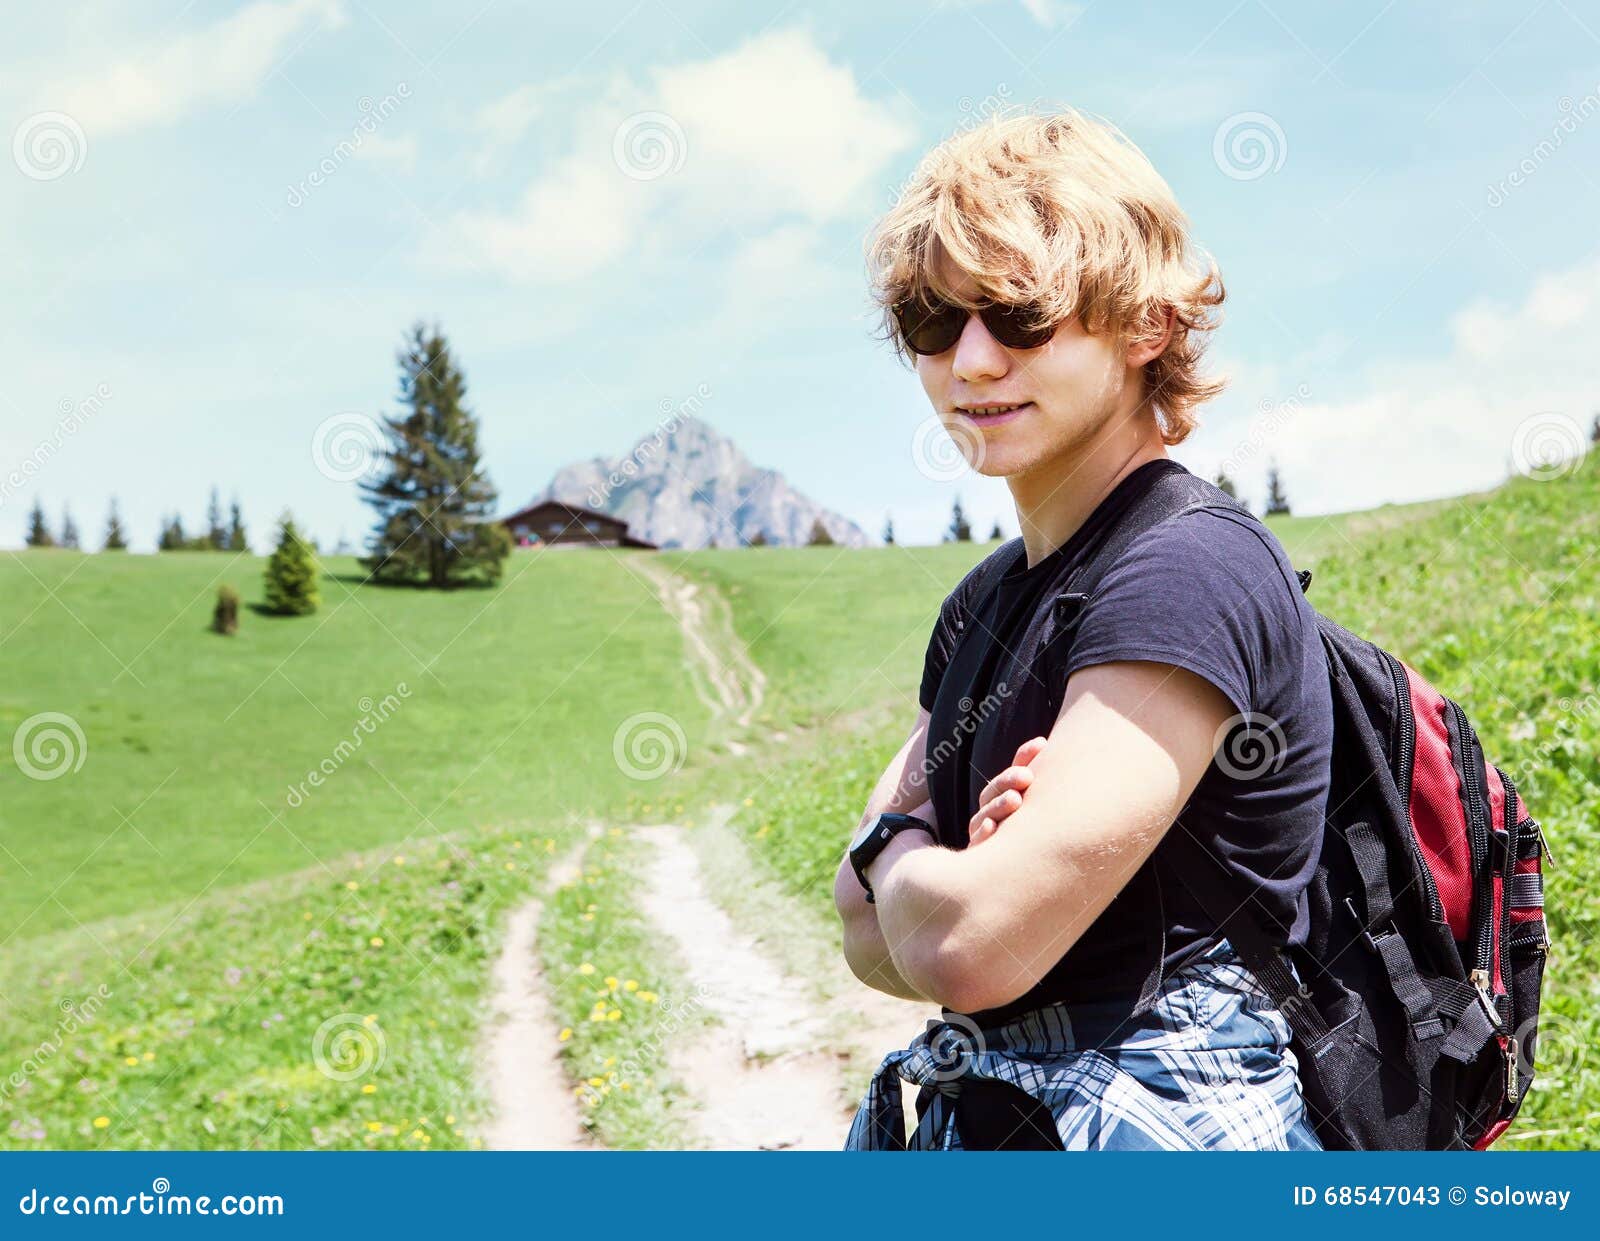 young mountain trekker portrait